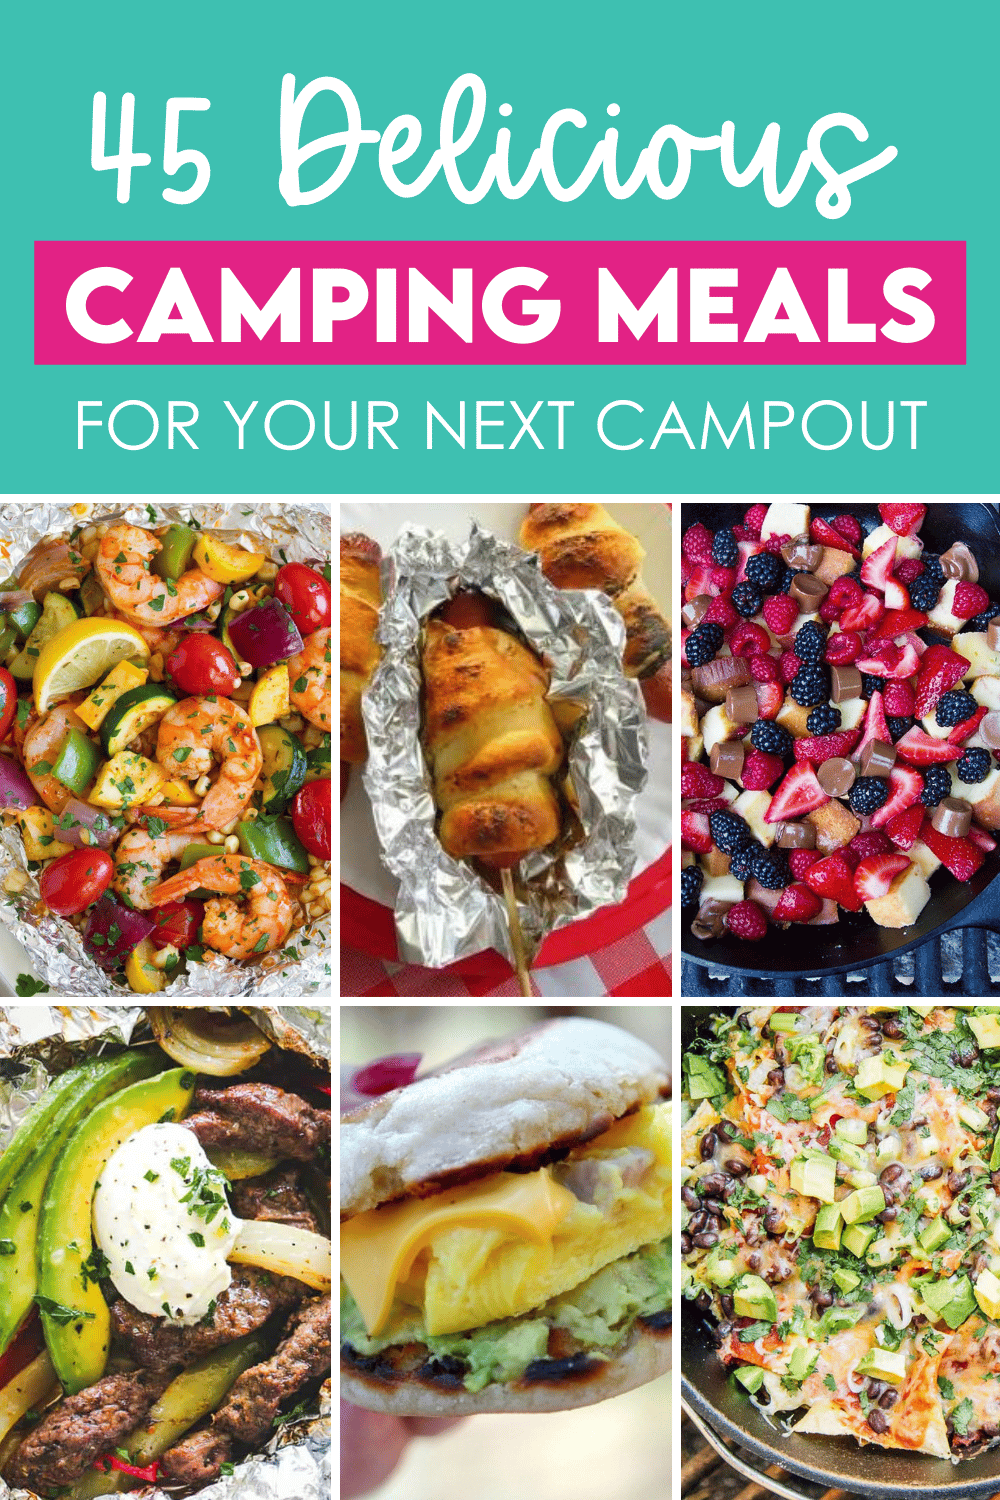 https://www.thedatingdivas.com/wp-content/uploads/2022/12/45-Delicious-Camping-Meals-For-Your-Next-Campout.png